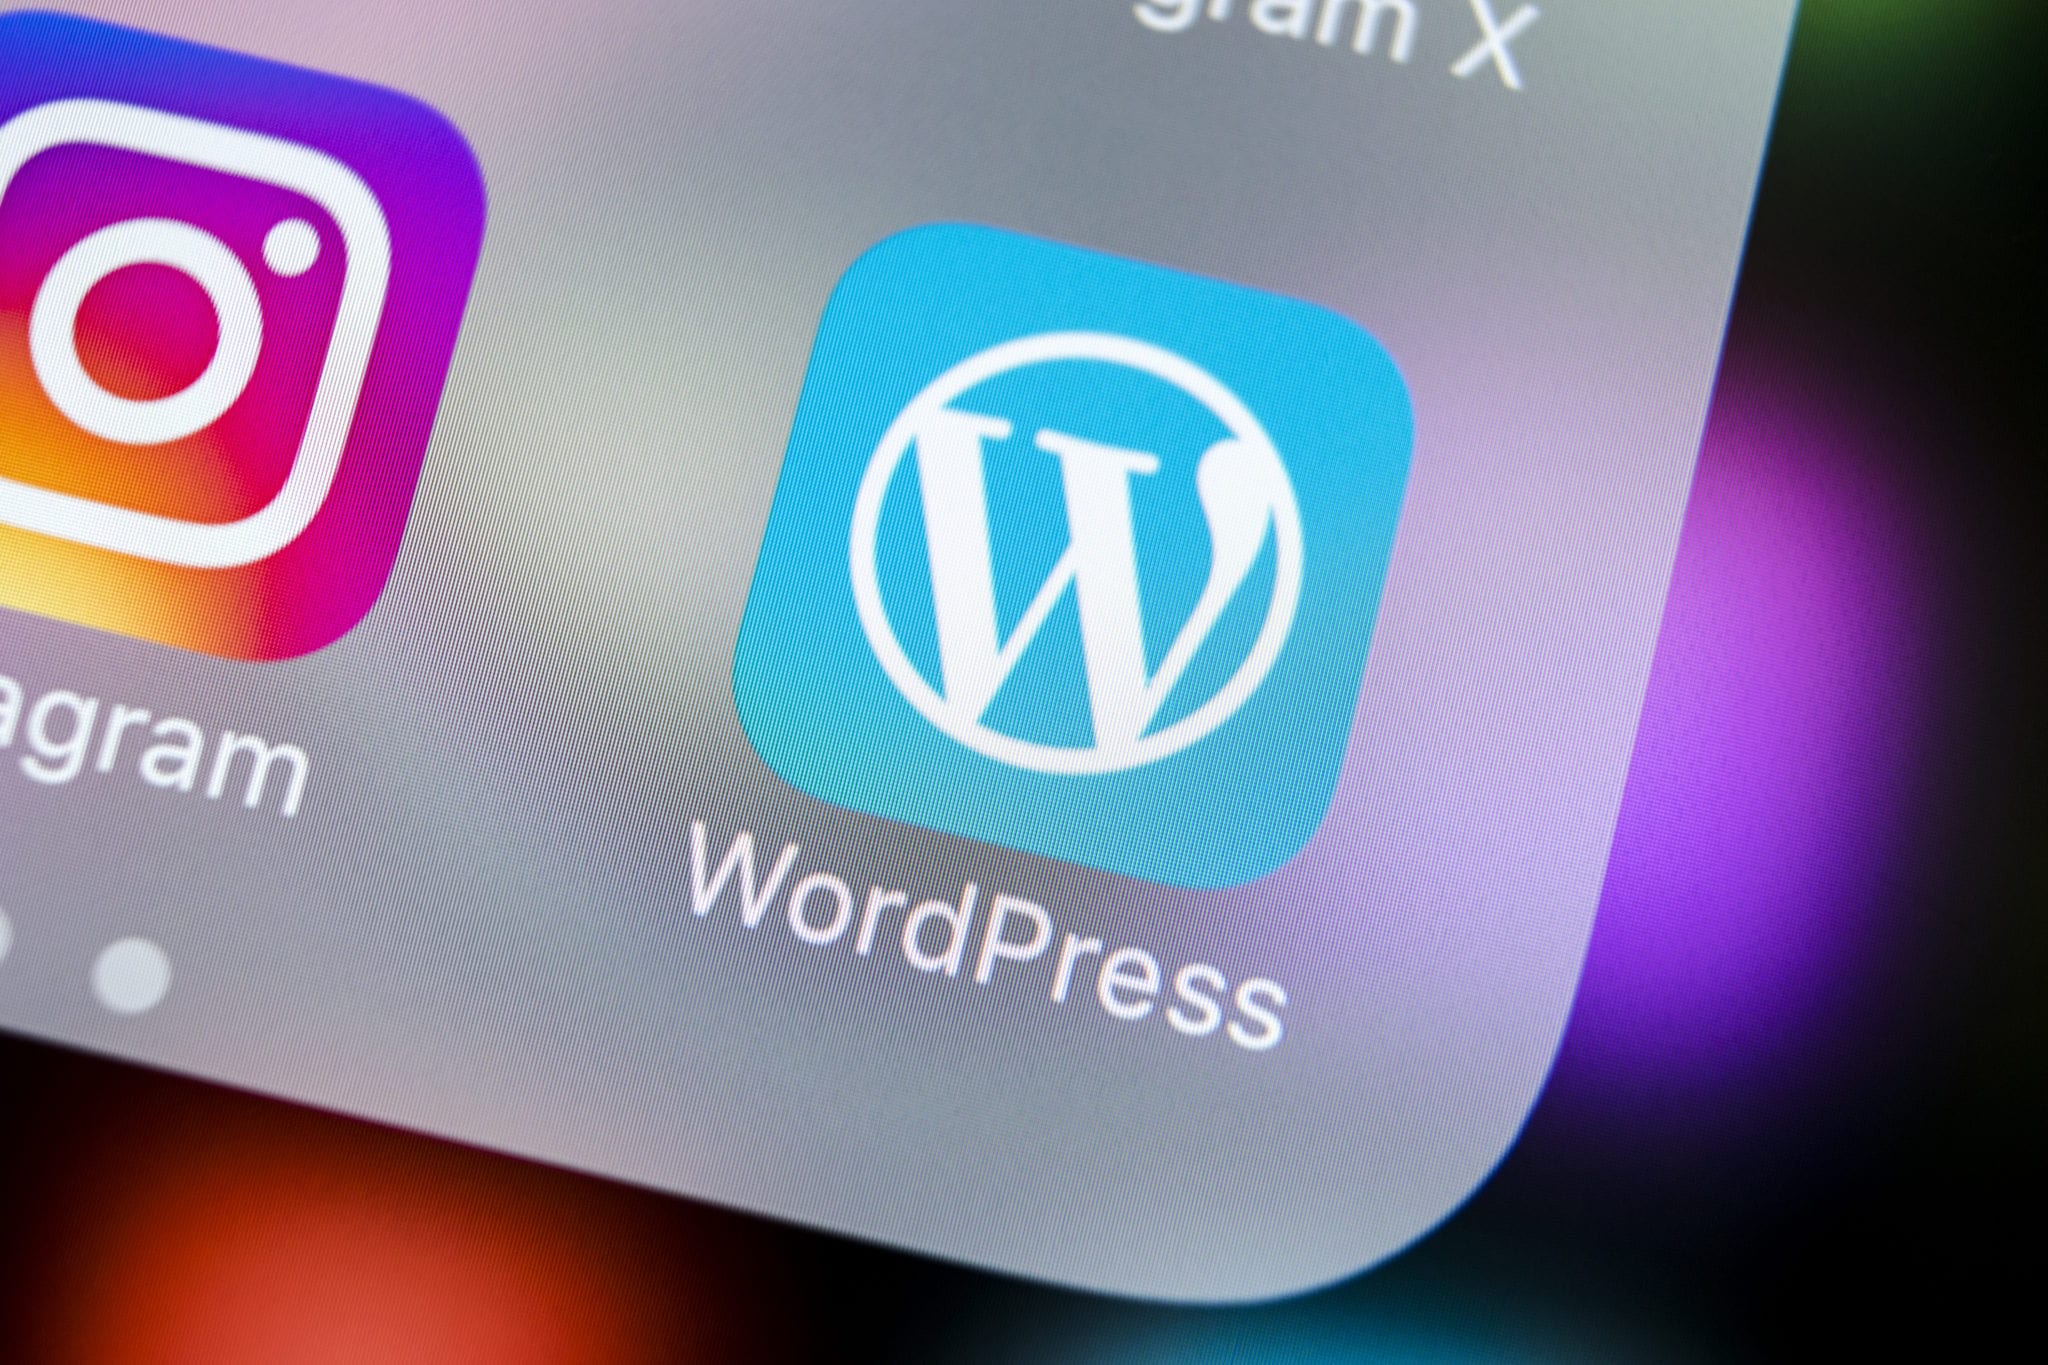 Wordpress application icon on Apple iPhone